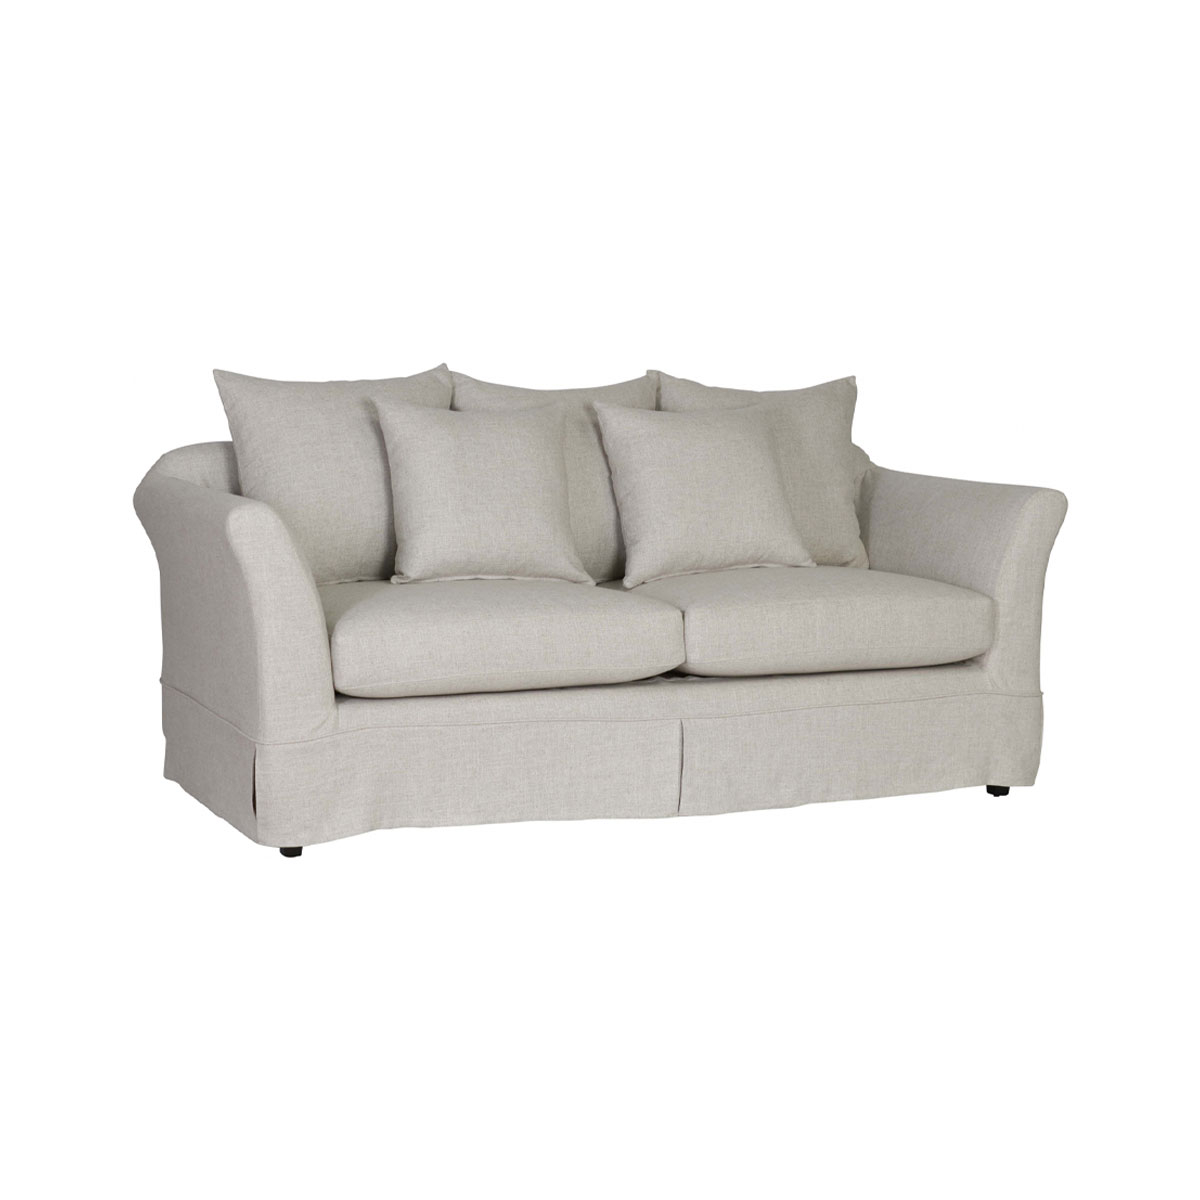 Block & Chisel Yale linen upholstered 2.5 seater sofa